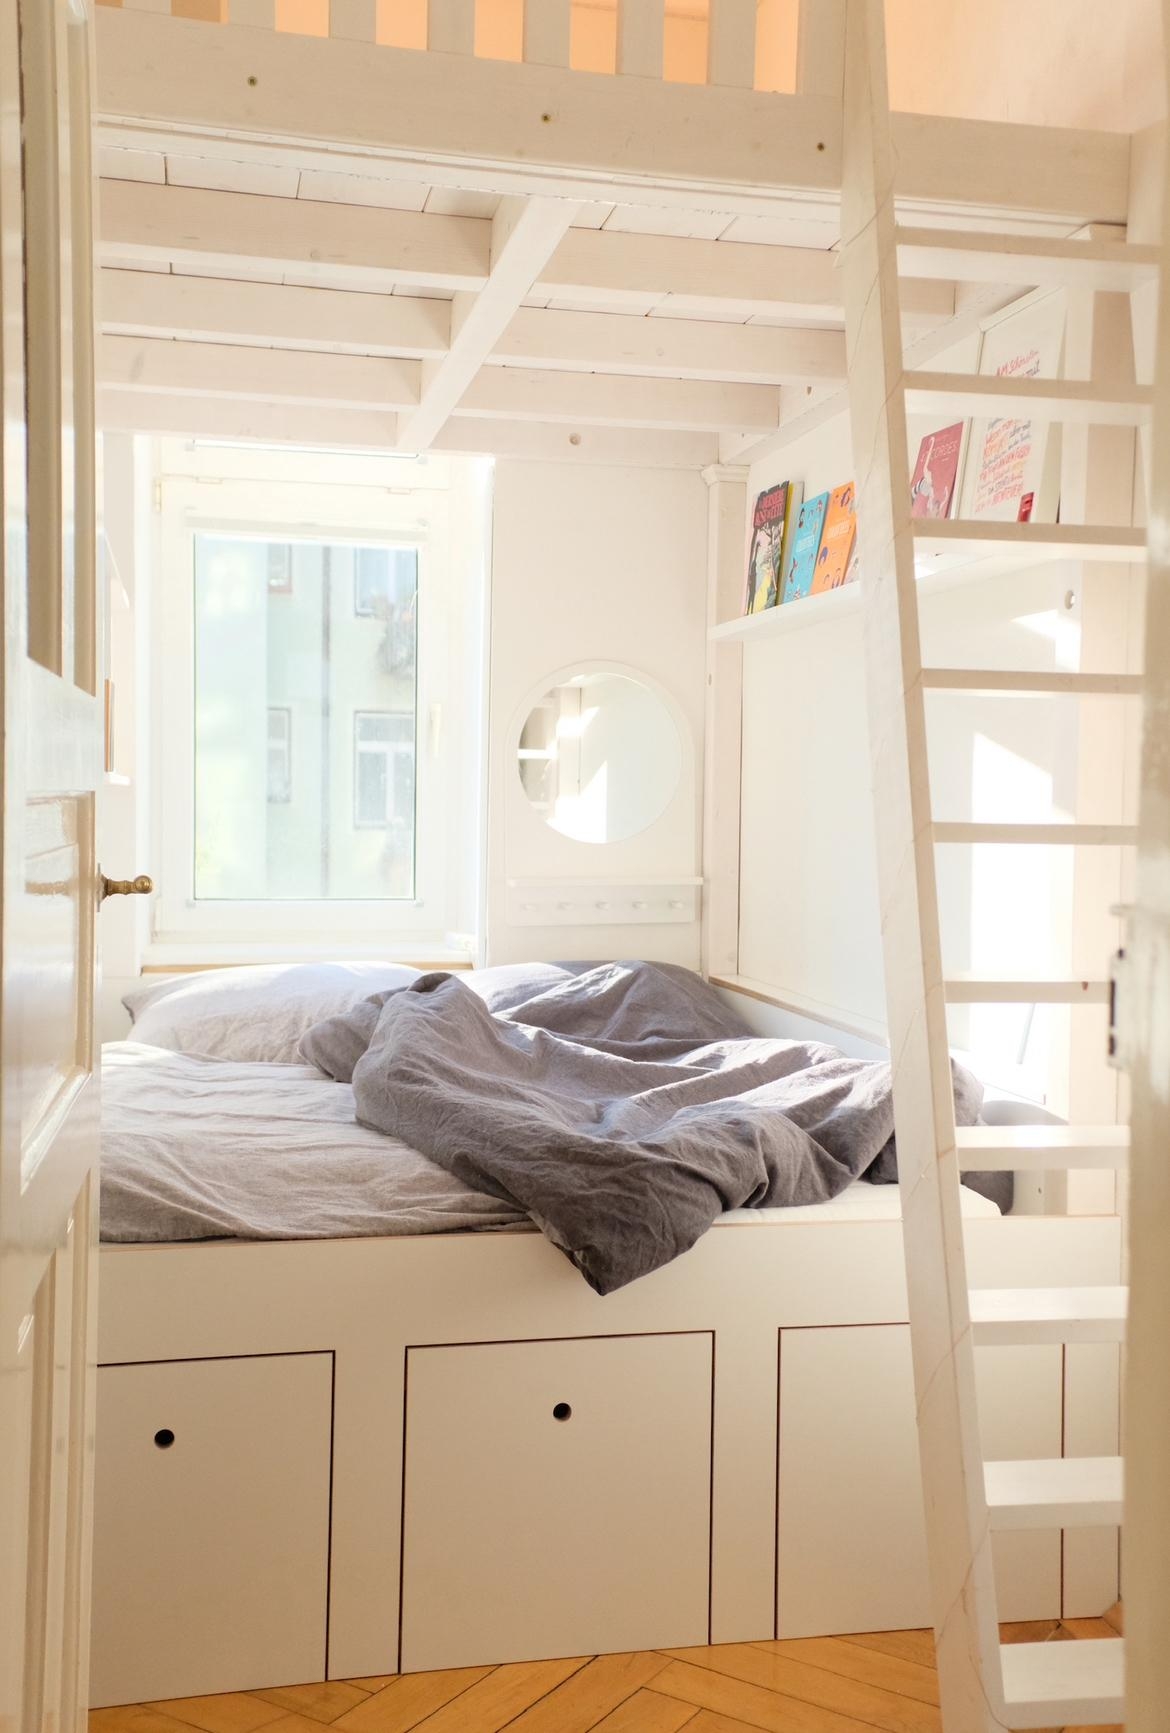 Stylisch storage in unserer Schlafkoje! 
#stylishstorage #bedroom #tinyroom  